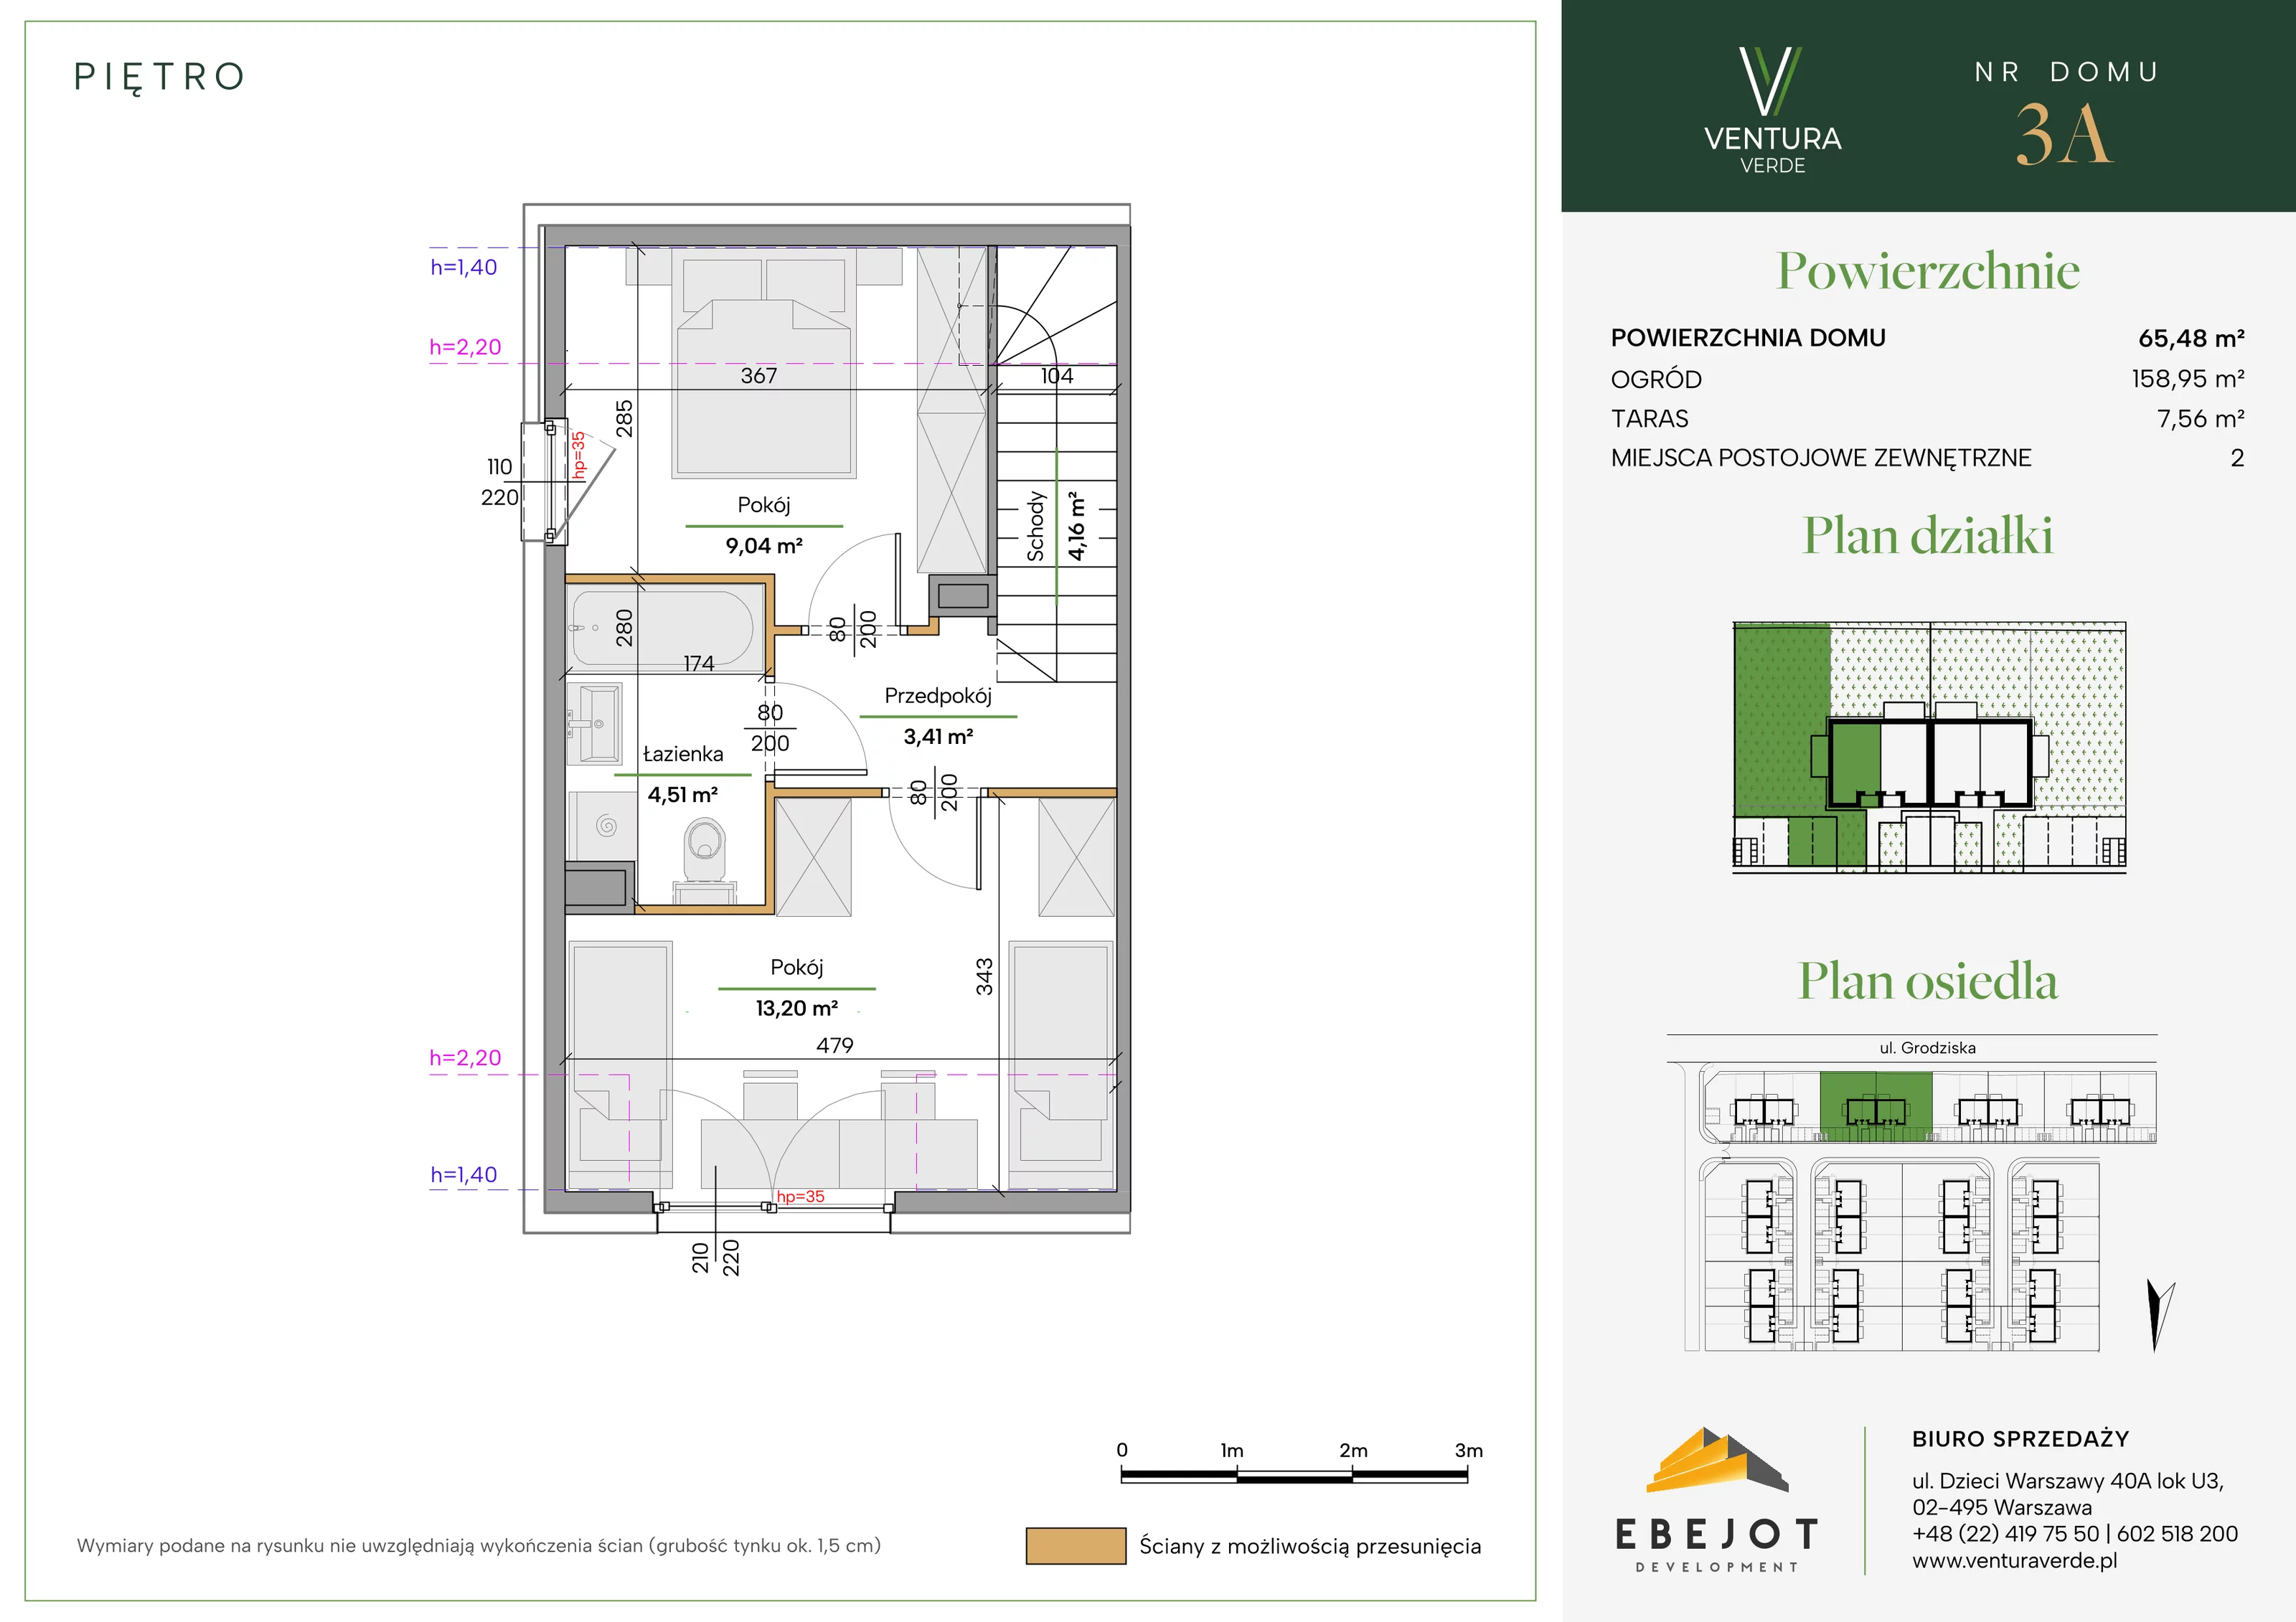 Dom 65,48 m², oferta nr 3A, Ventura Verde II, Stara Wieś, ul. Grodziska